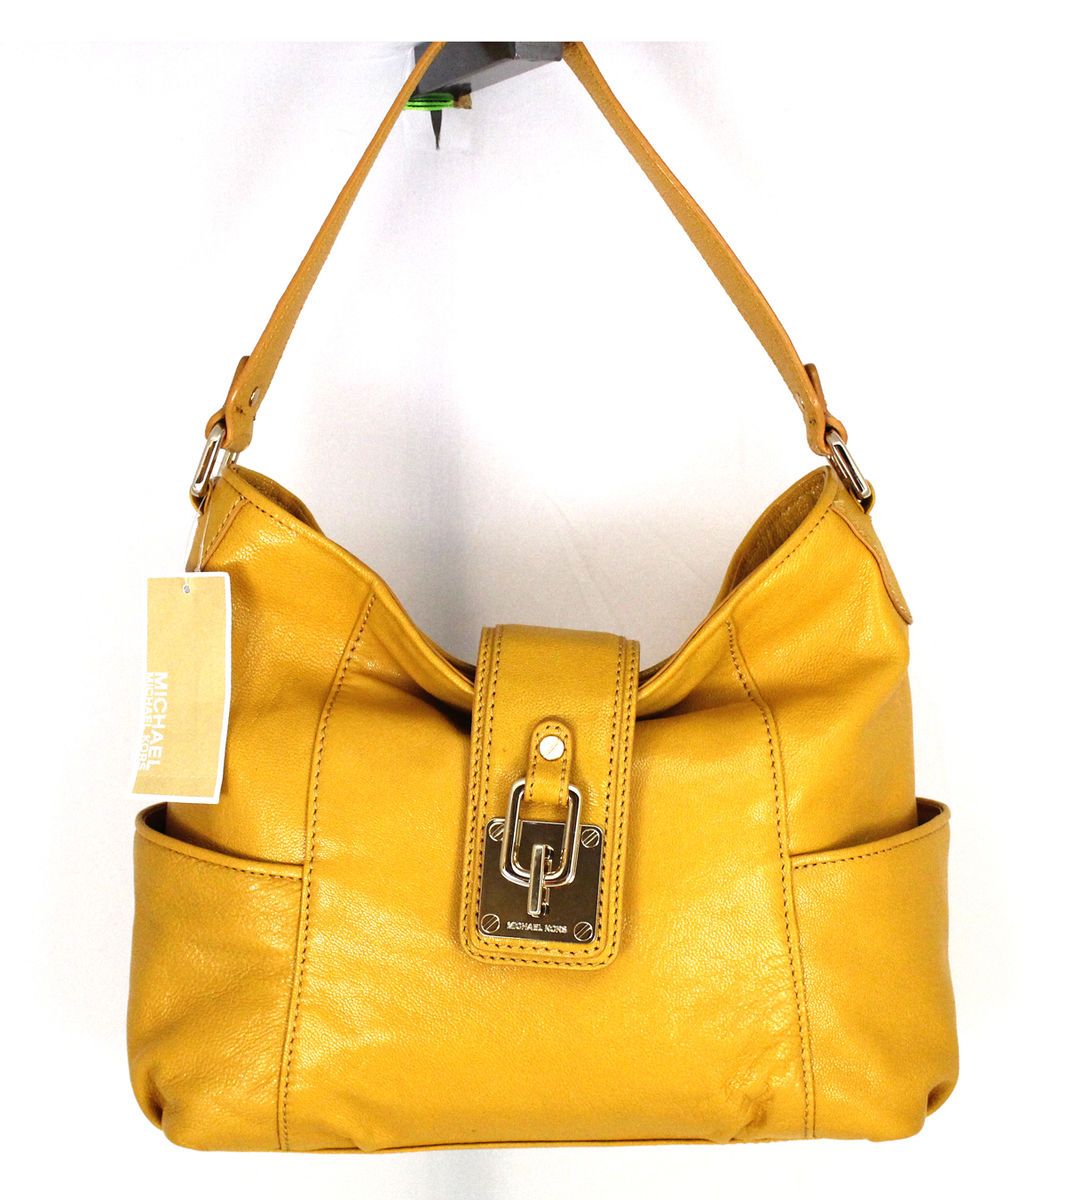 NWOT Michael Kors Mustard Yellow Leather Hobo Hand Bag Purse shoulder 